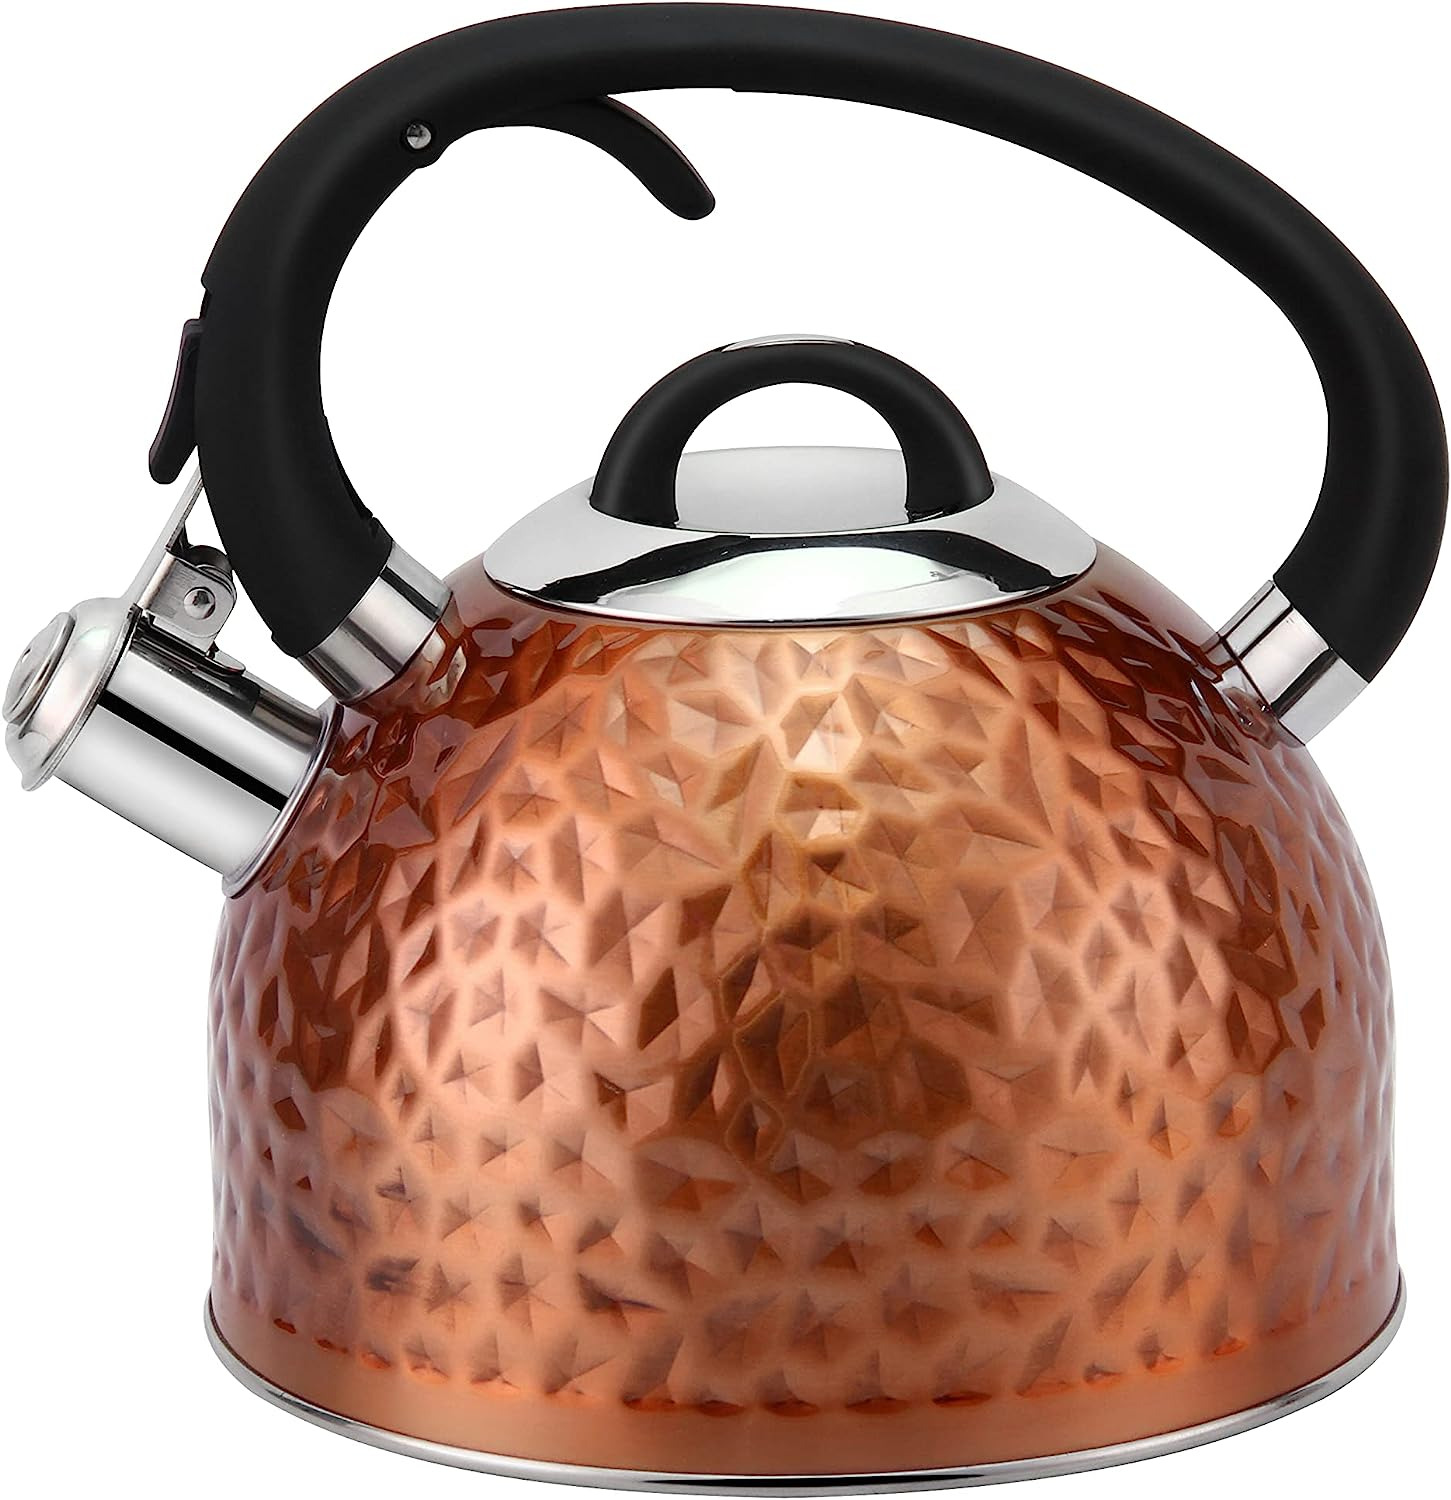 Copper Tea Kettle Stainless Steel Teapot Whistling Kettle Unique Button Control 